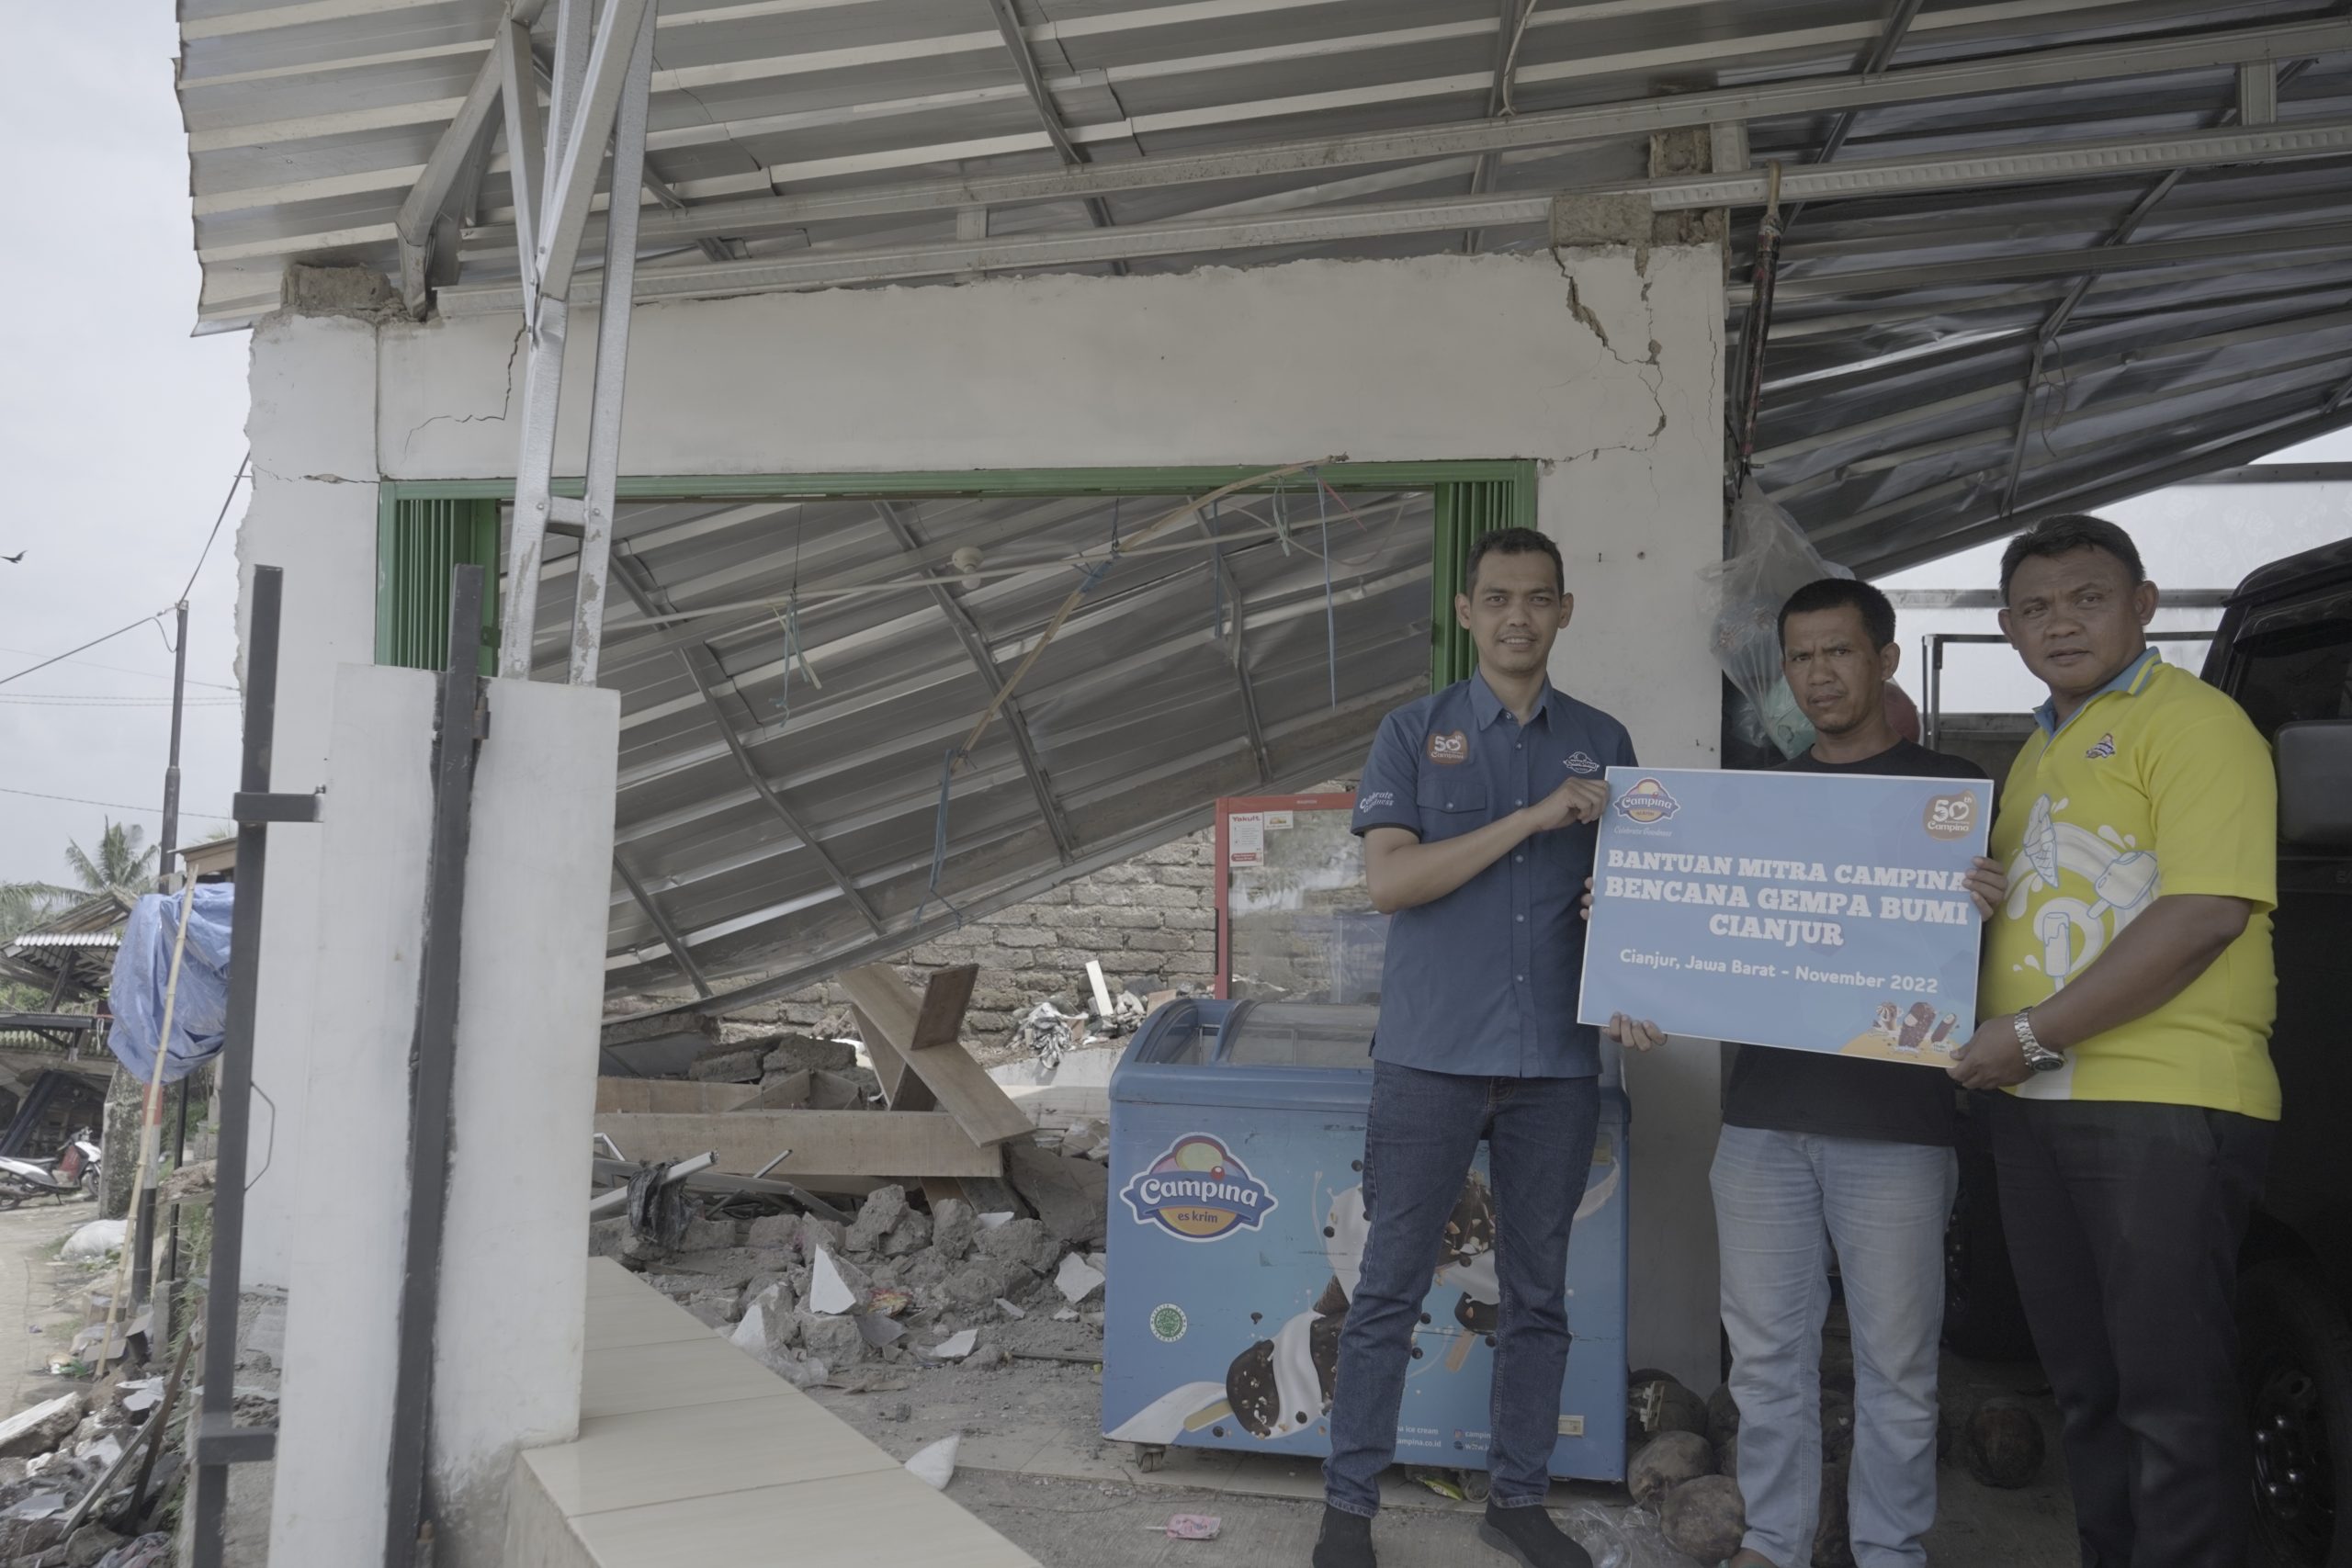 Bantuan untuk mitra Campina terdampak gempa bumi Cianjur